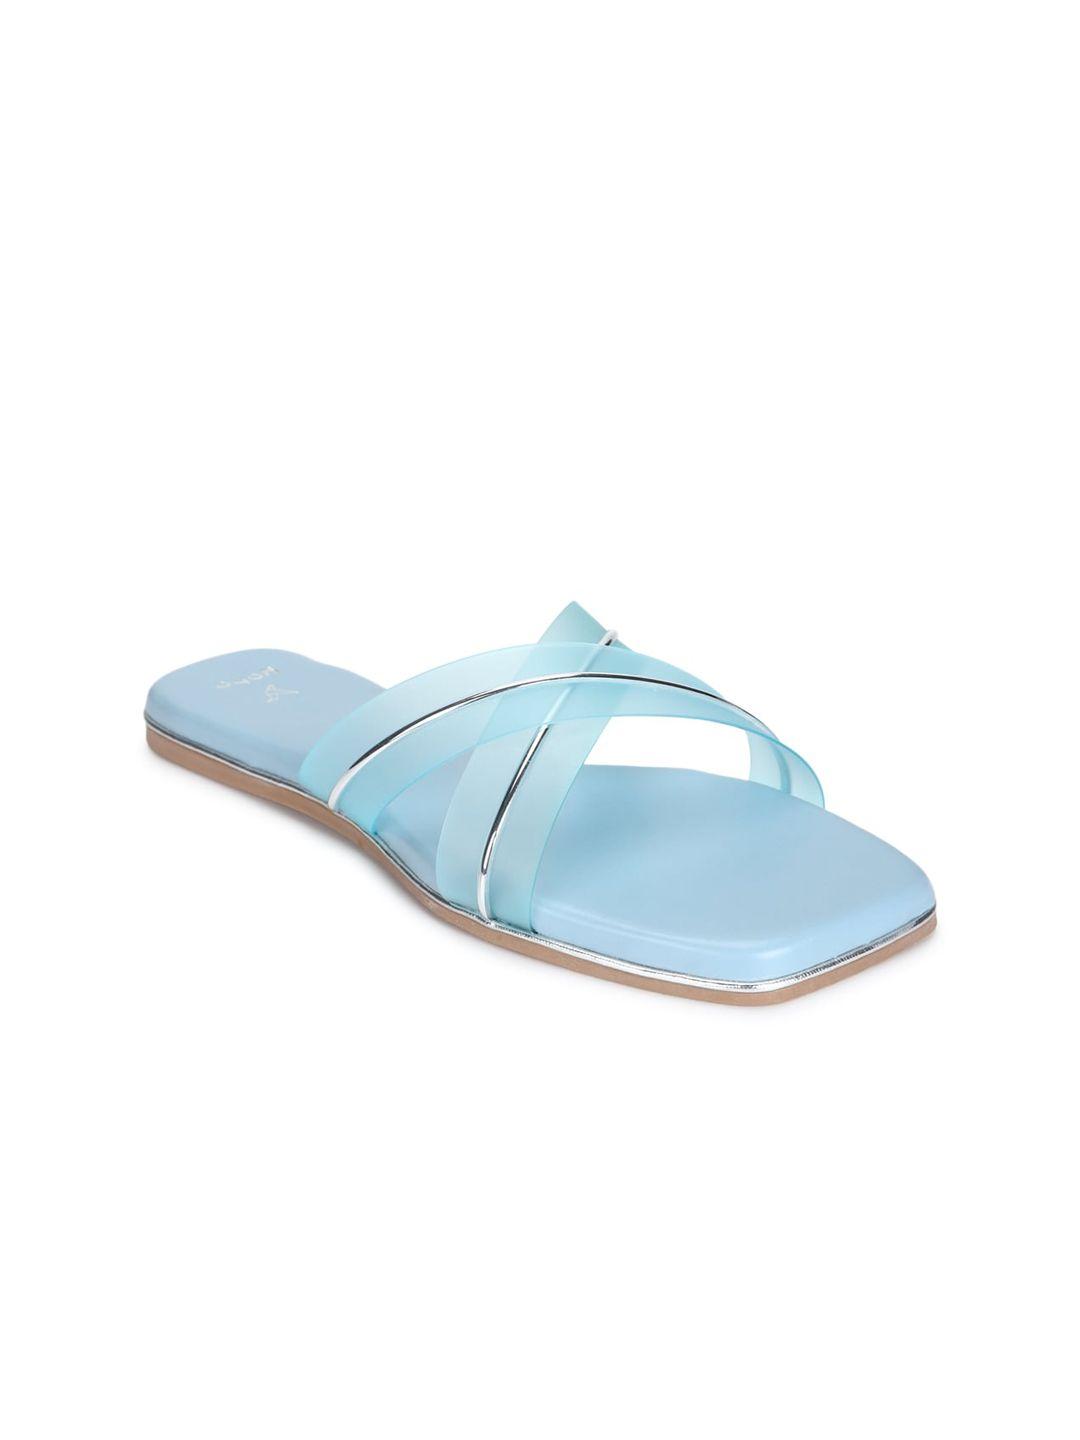 yoho women blue embellished open toe flats